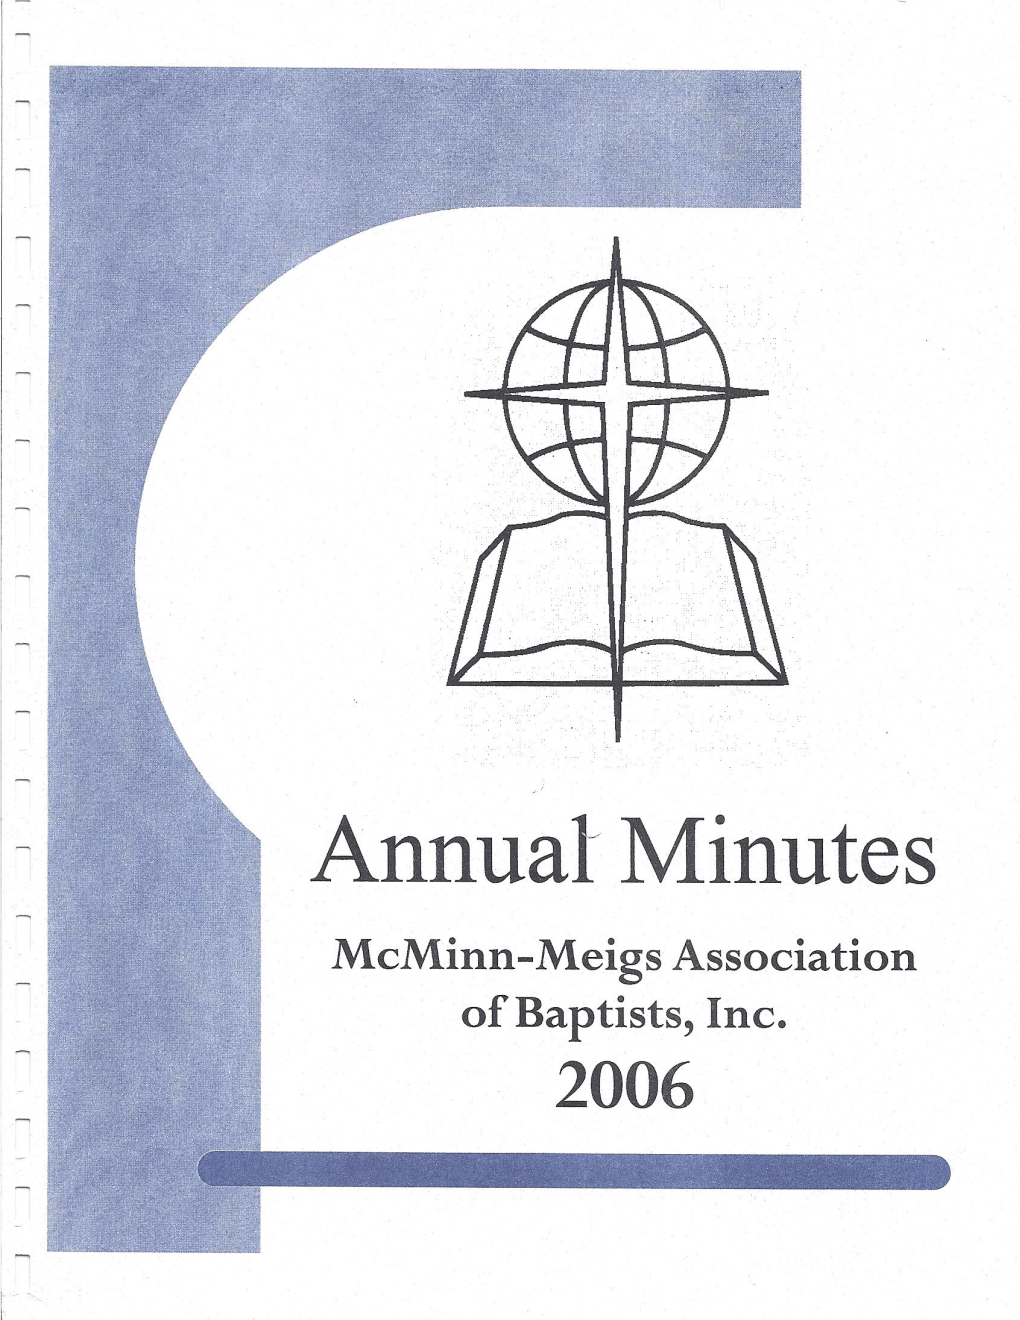 2006 Annual Minutes Mcminn-Meigs Association of Baptists, Inc